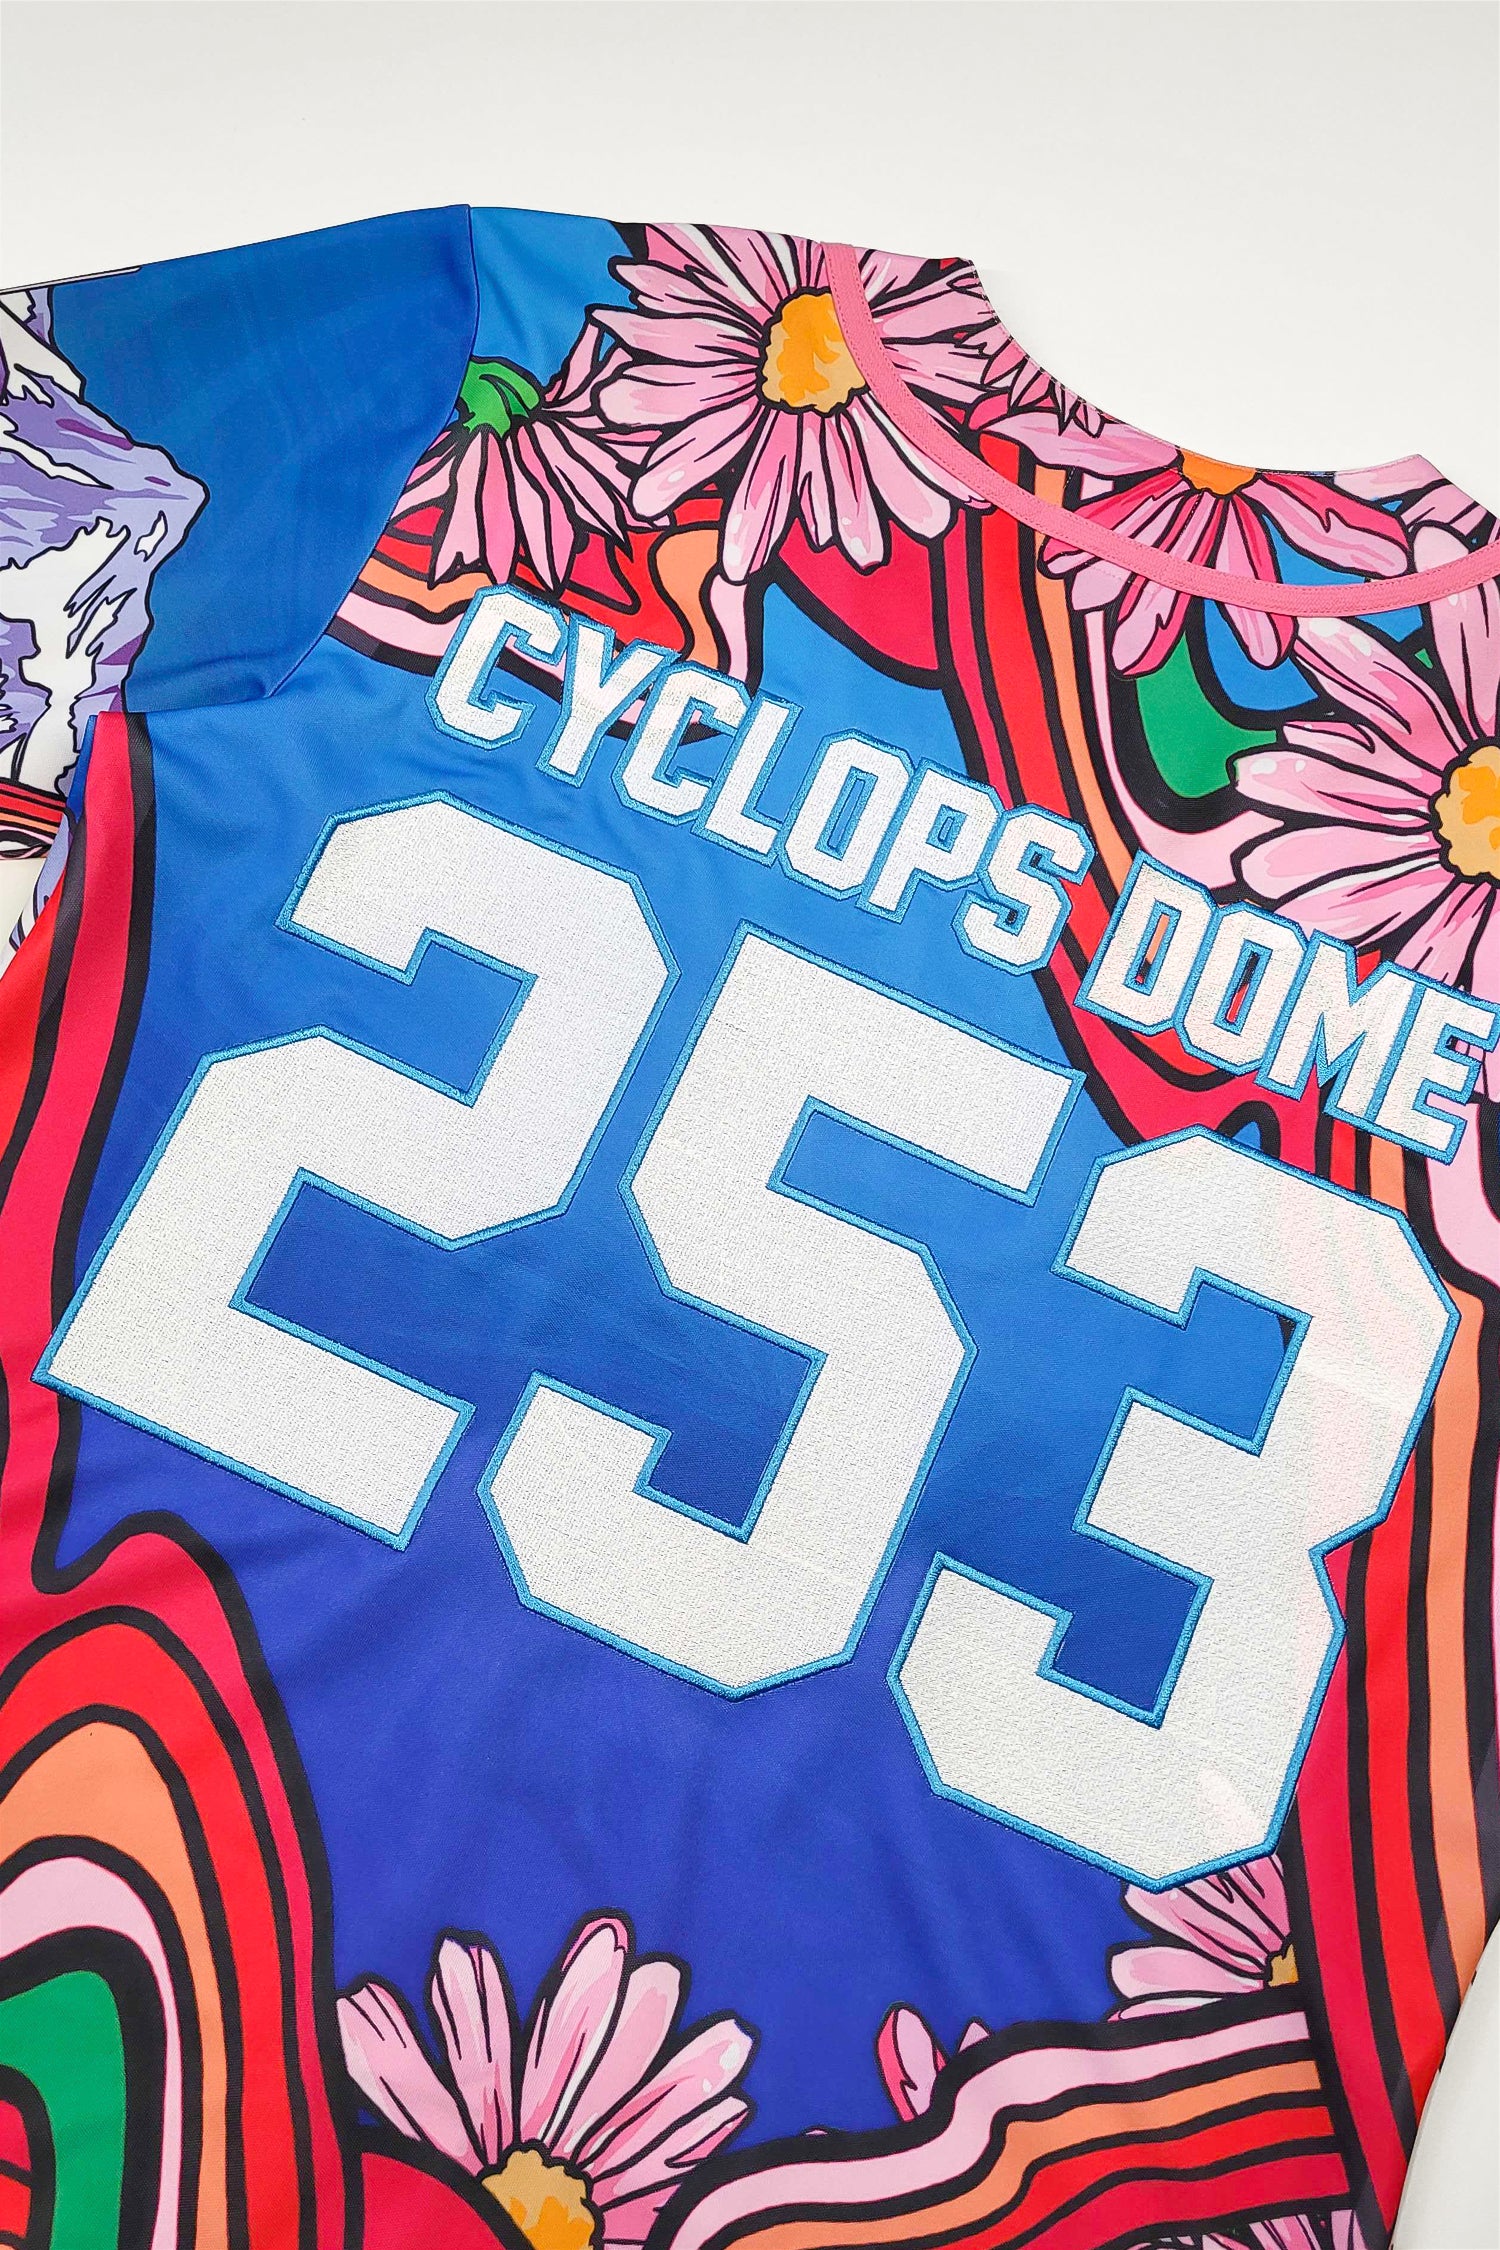 Subtronics - Cyclops Dome Baseball Jersey